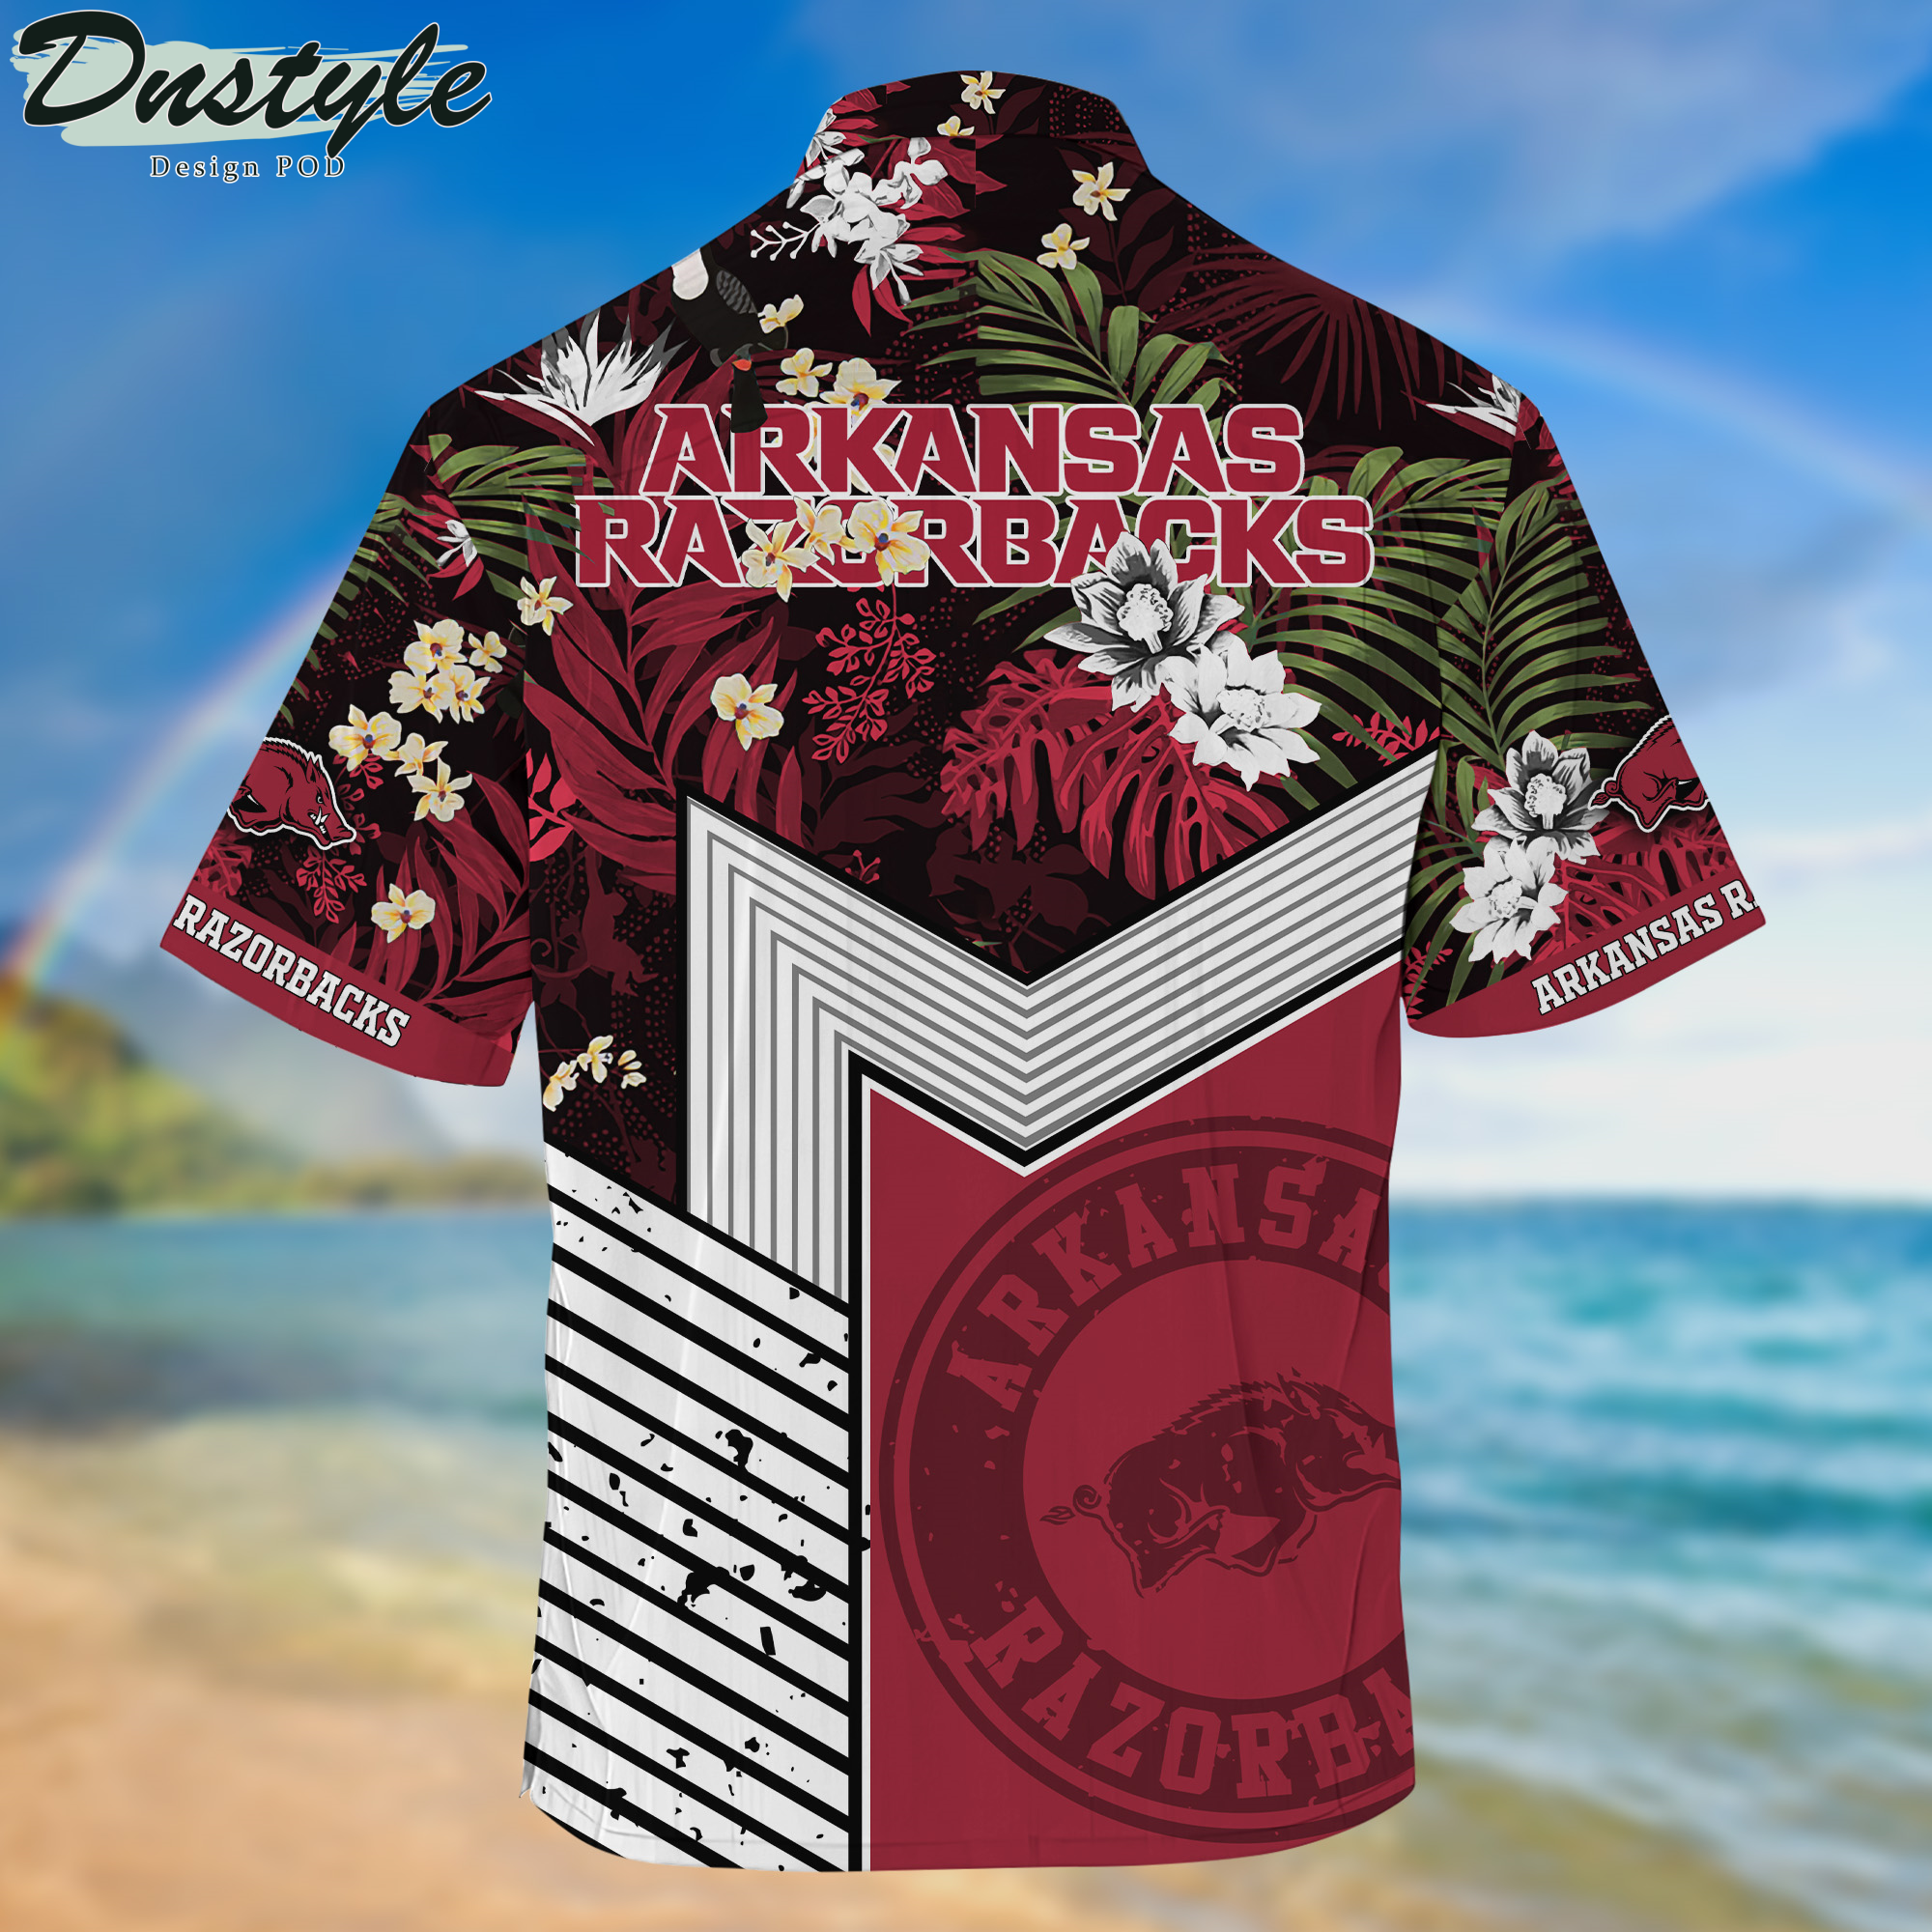 Arkansas Razorbacks Hawaii Shirt And Shorts New Collection